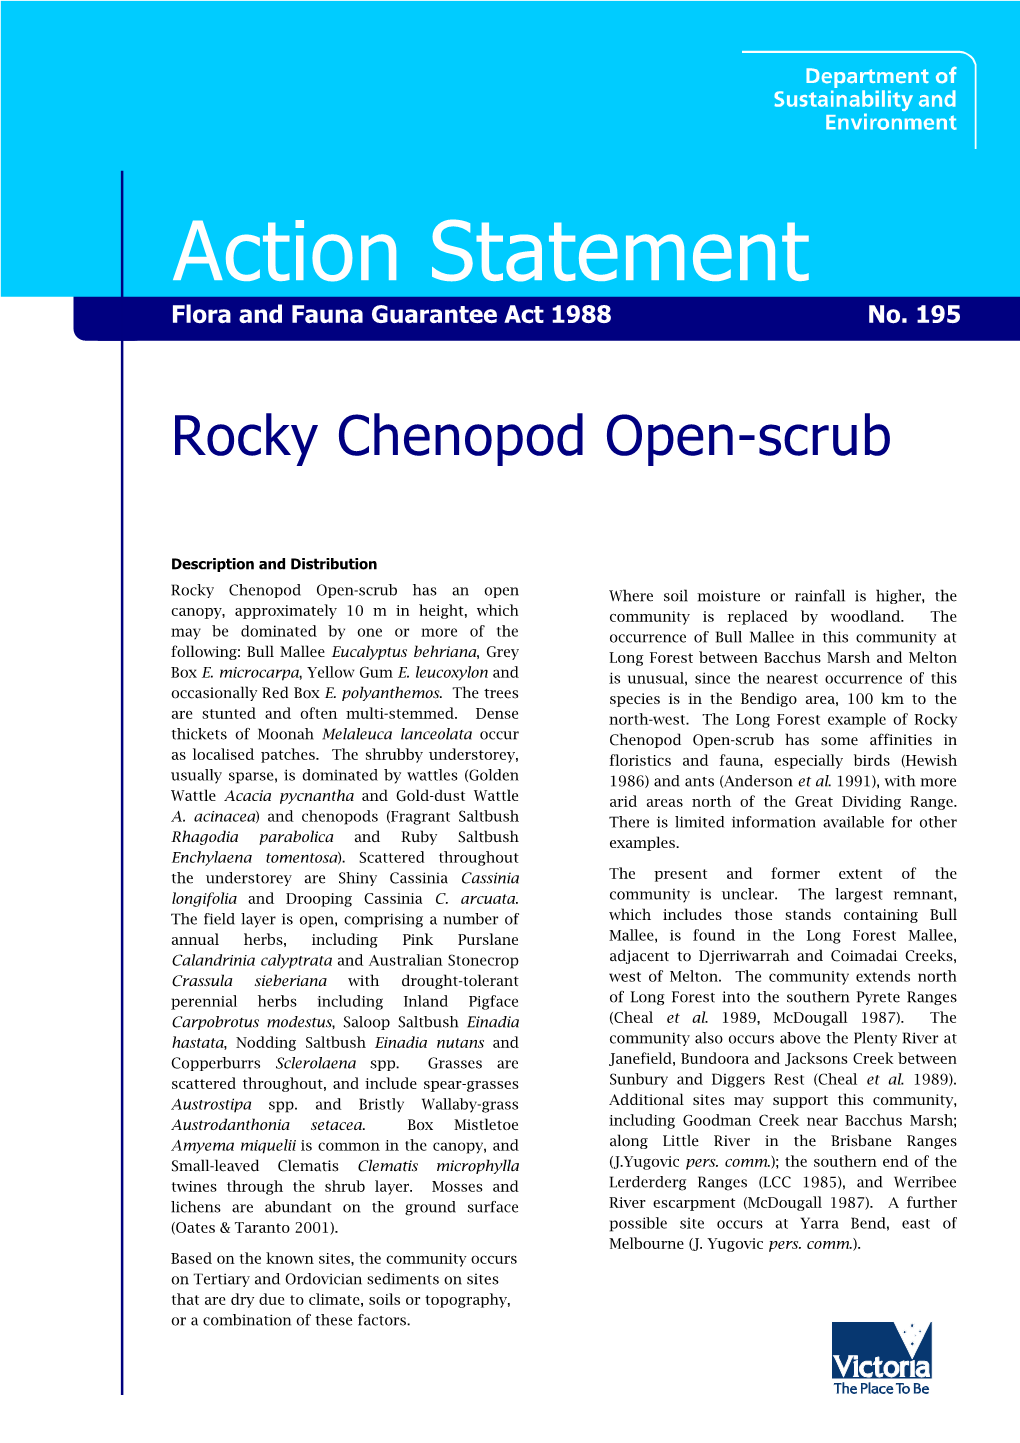 Rocky Chenopod Open-Scrub